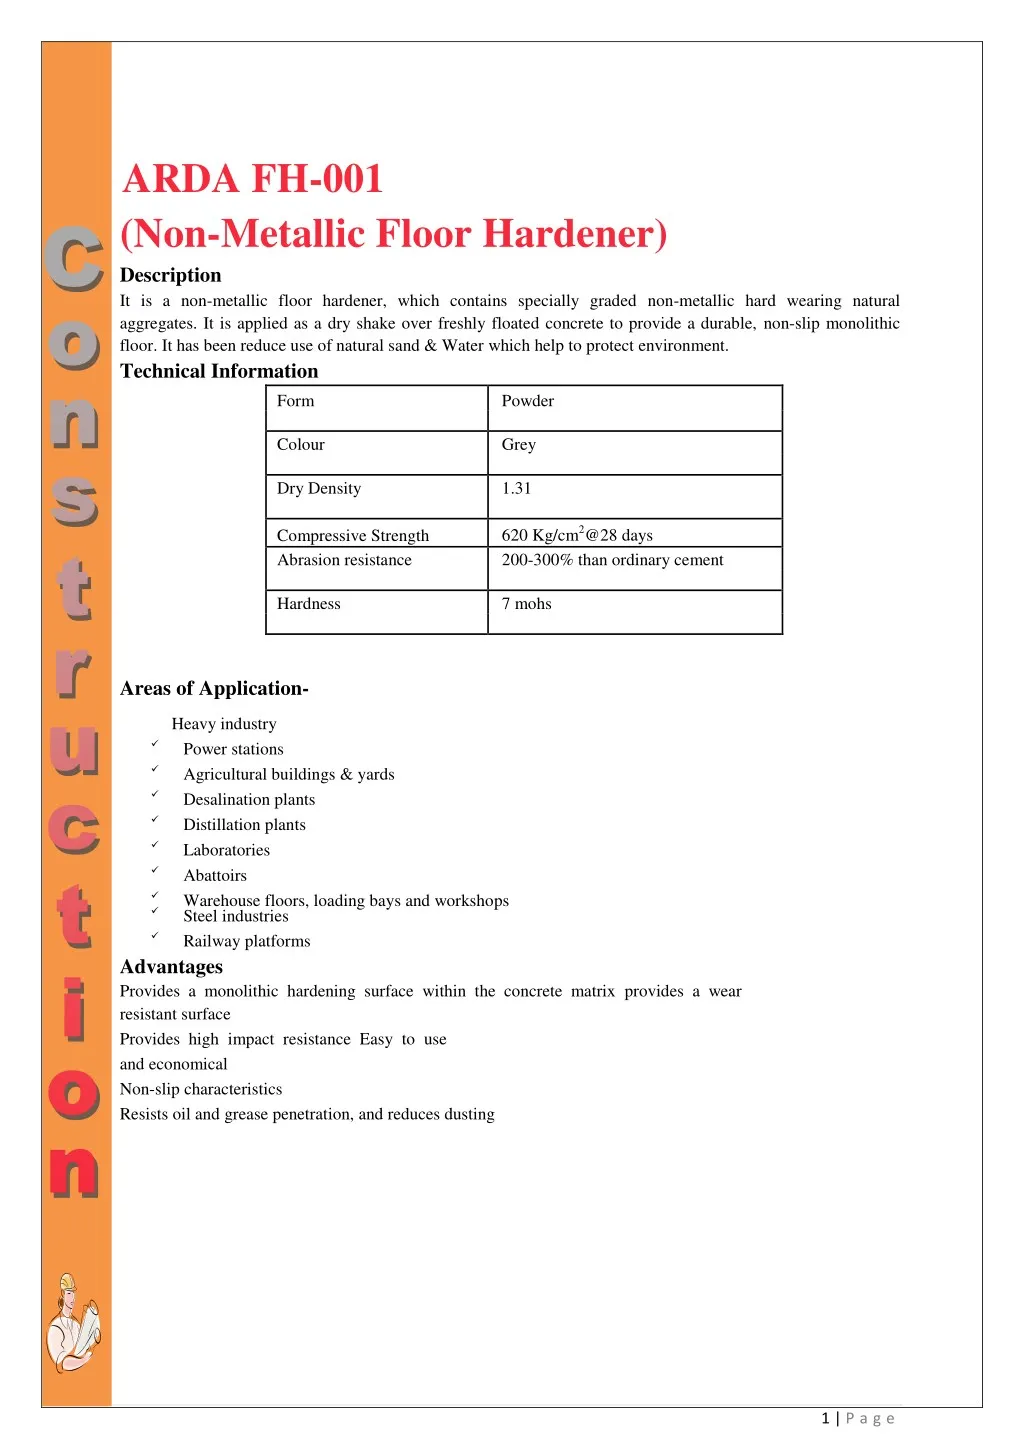 arda fh 001 non metallic floor hardener